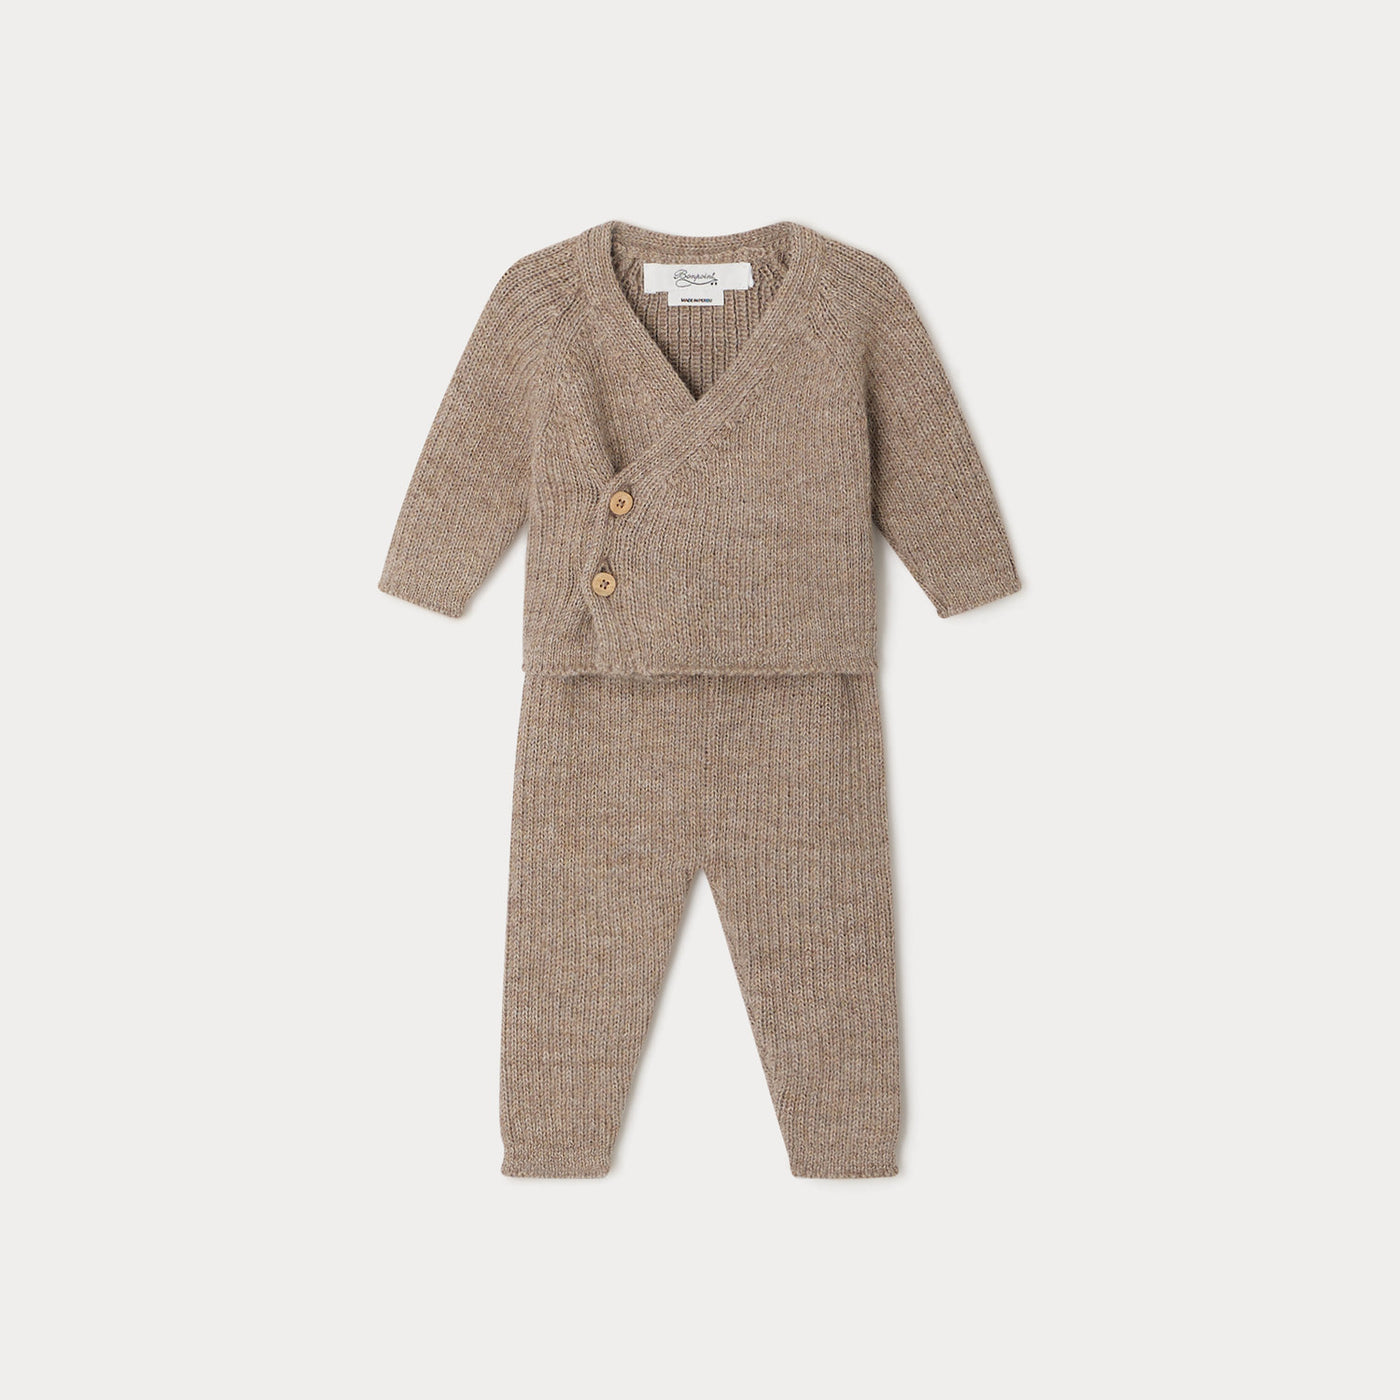 Bonpoint tan knit baby set